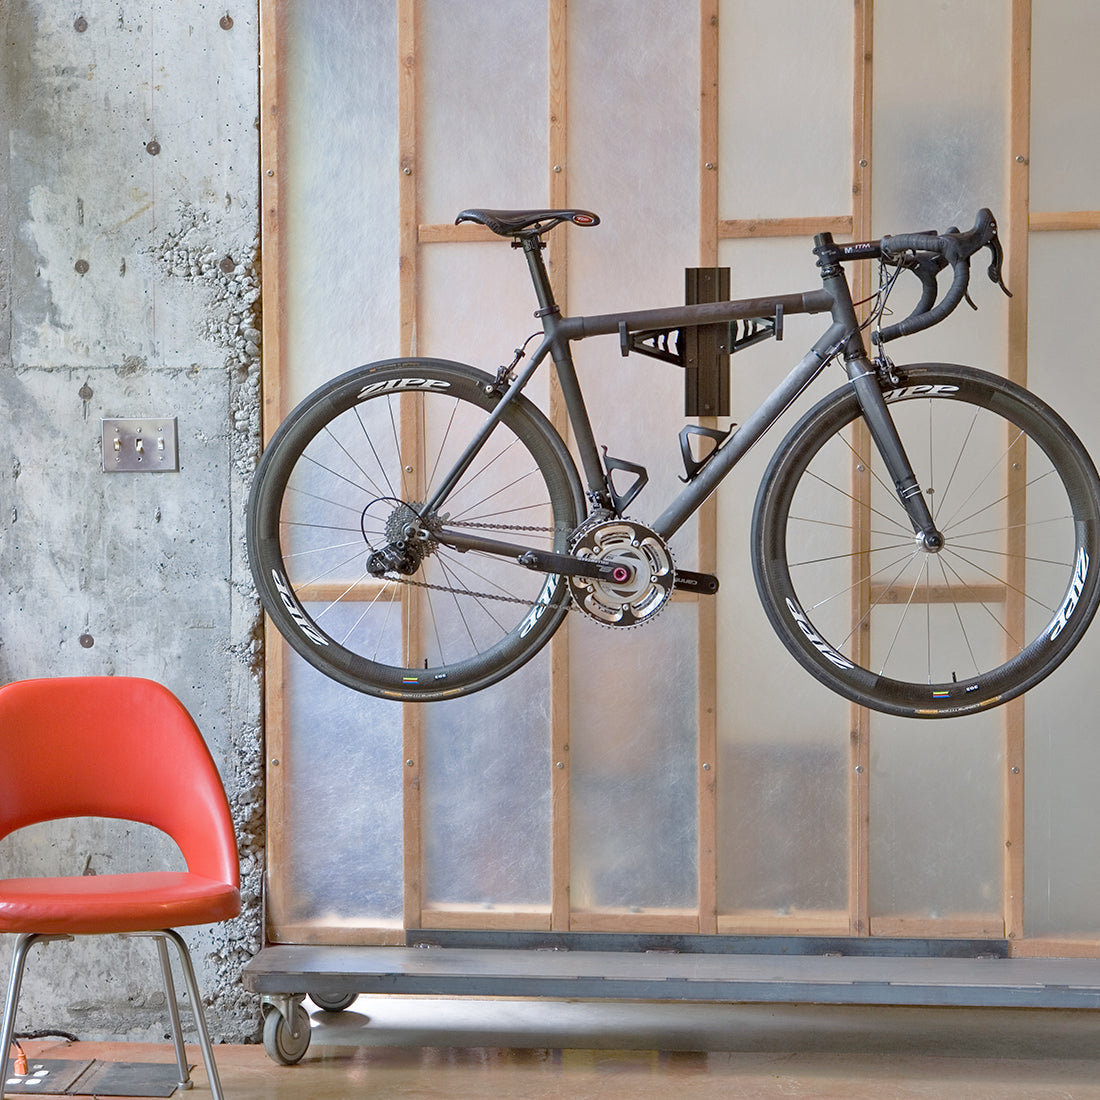 Black road bike suspended on bike storage cradle arms installed on 2x4 wall.